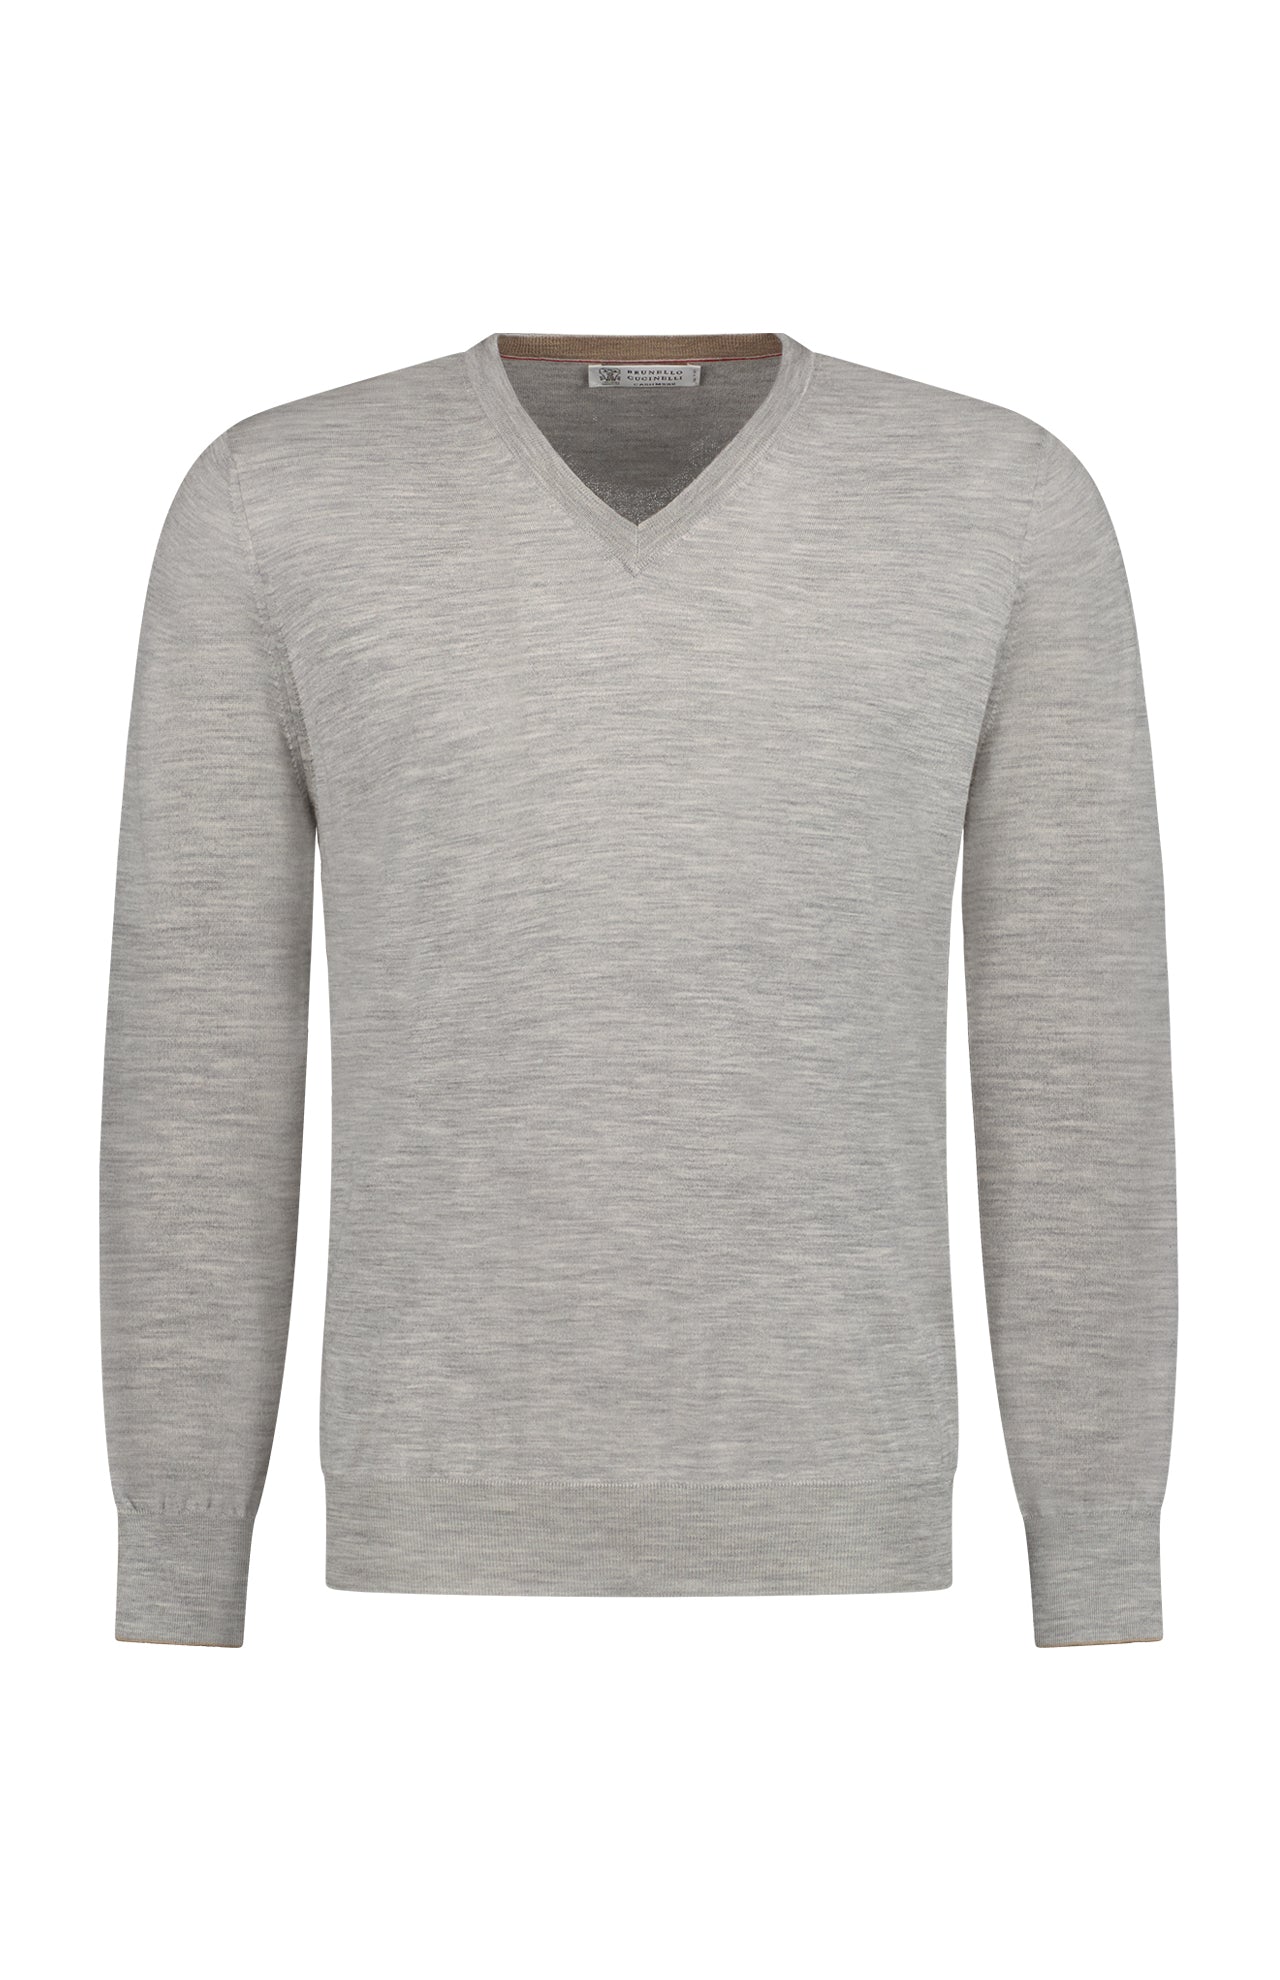 Cash/Wool V-Neck Sweater (7162957398131)